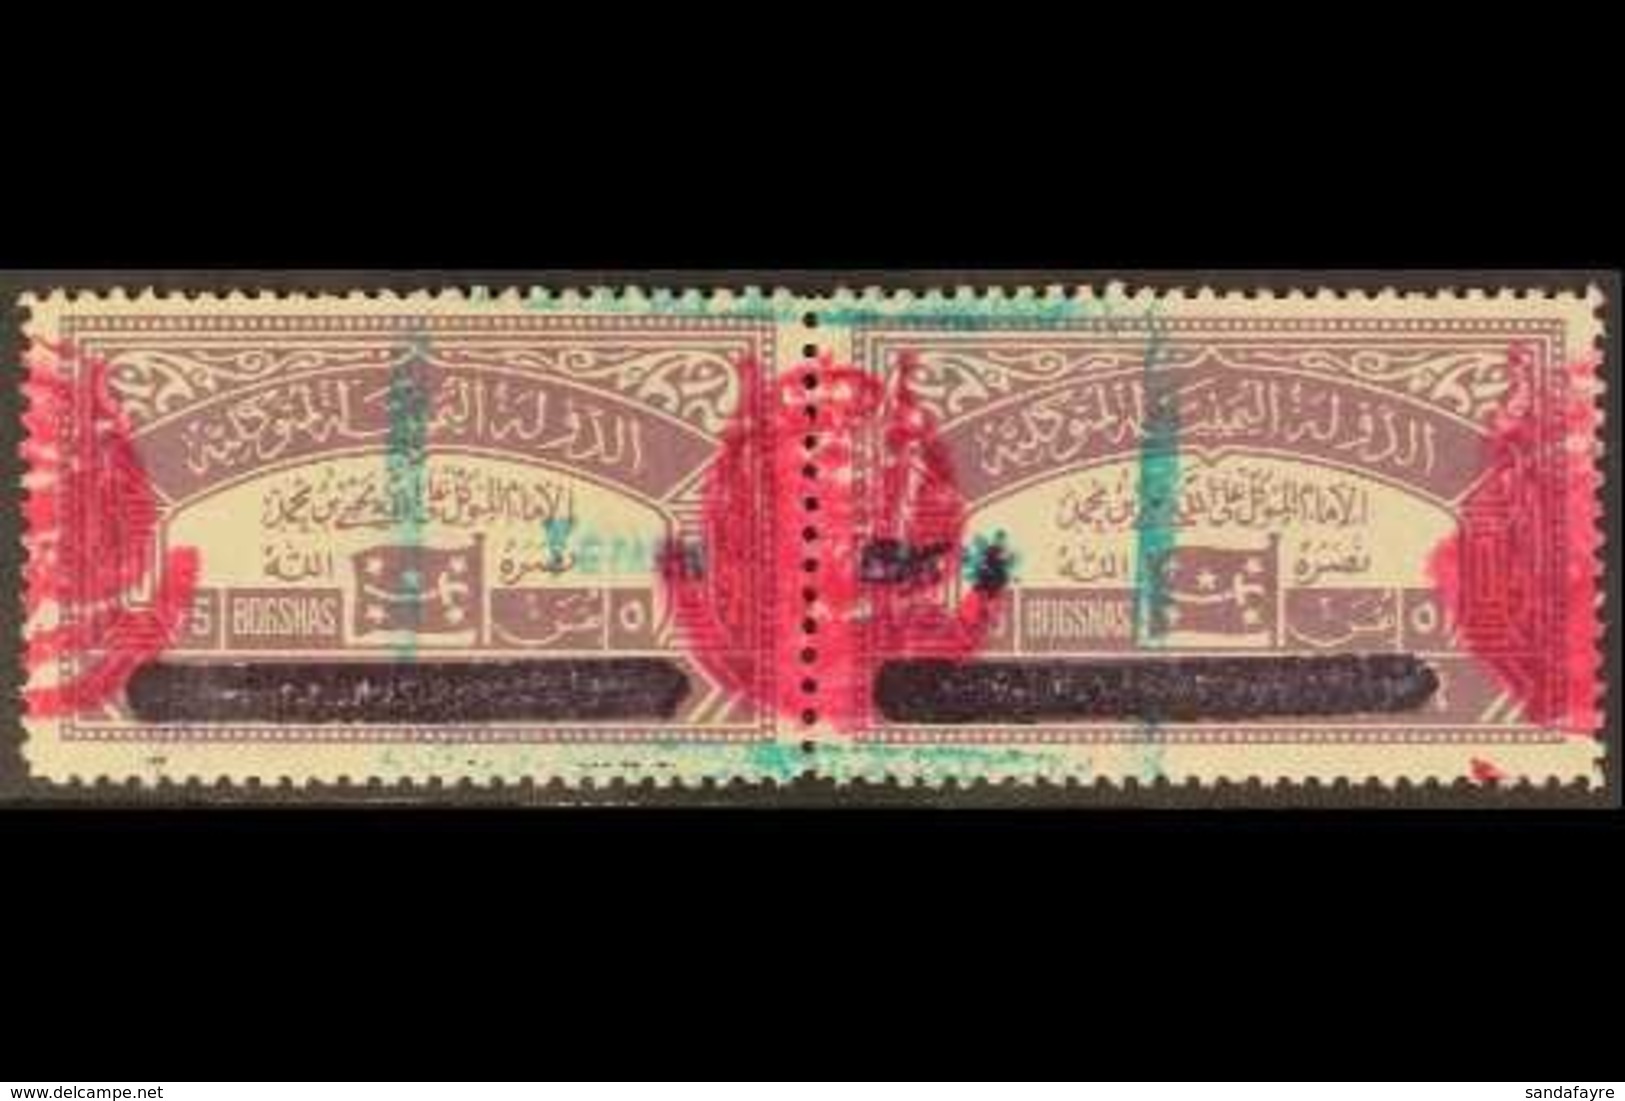 ROYALIST CIVIL WAR ISSUES 1964 10b (5b + 5b) Dull Purple Consular Fee Stamp Overprinted, Horizontal Pair Issued At Al-Ma - Yemen